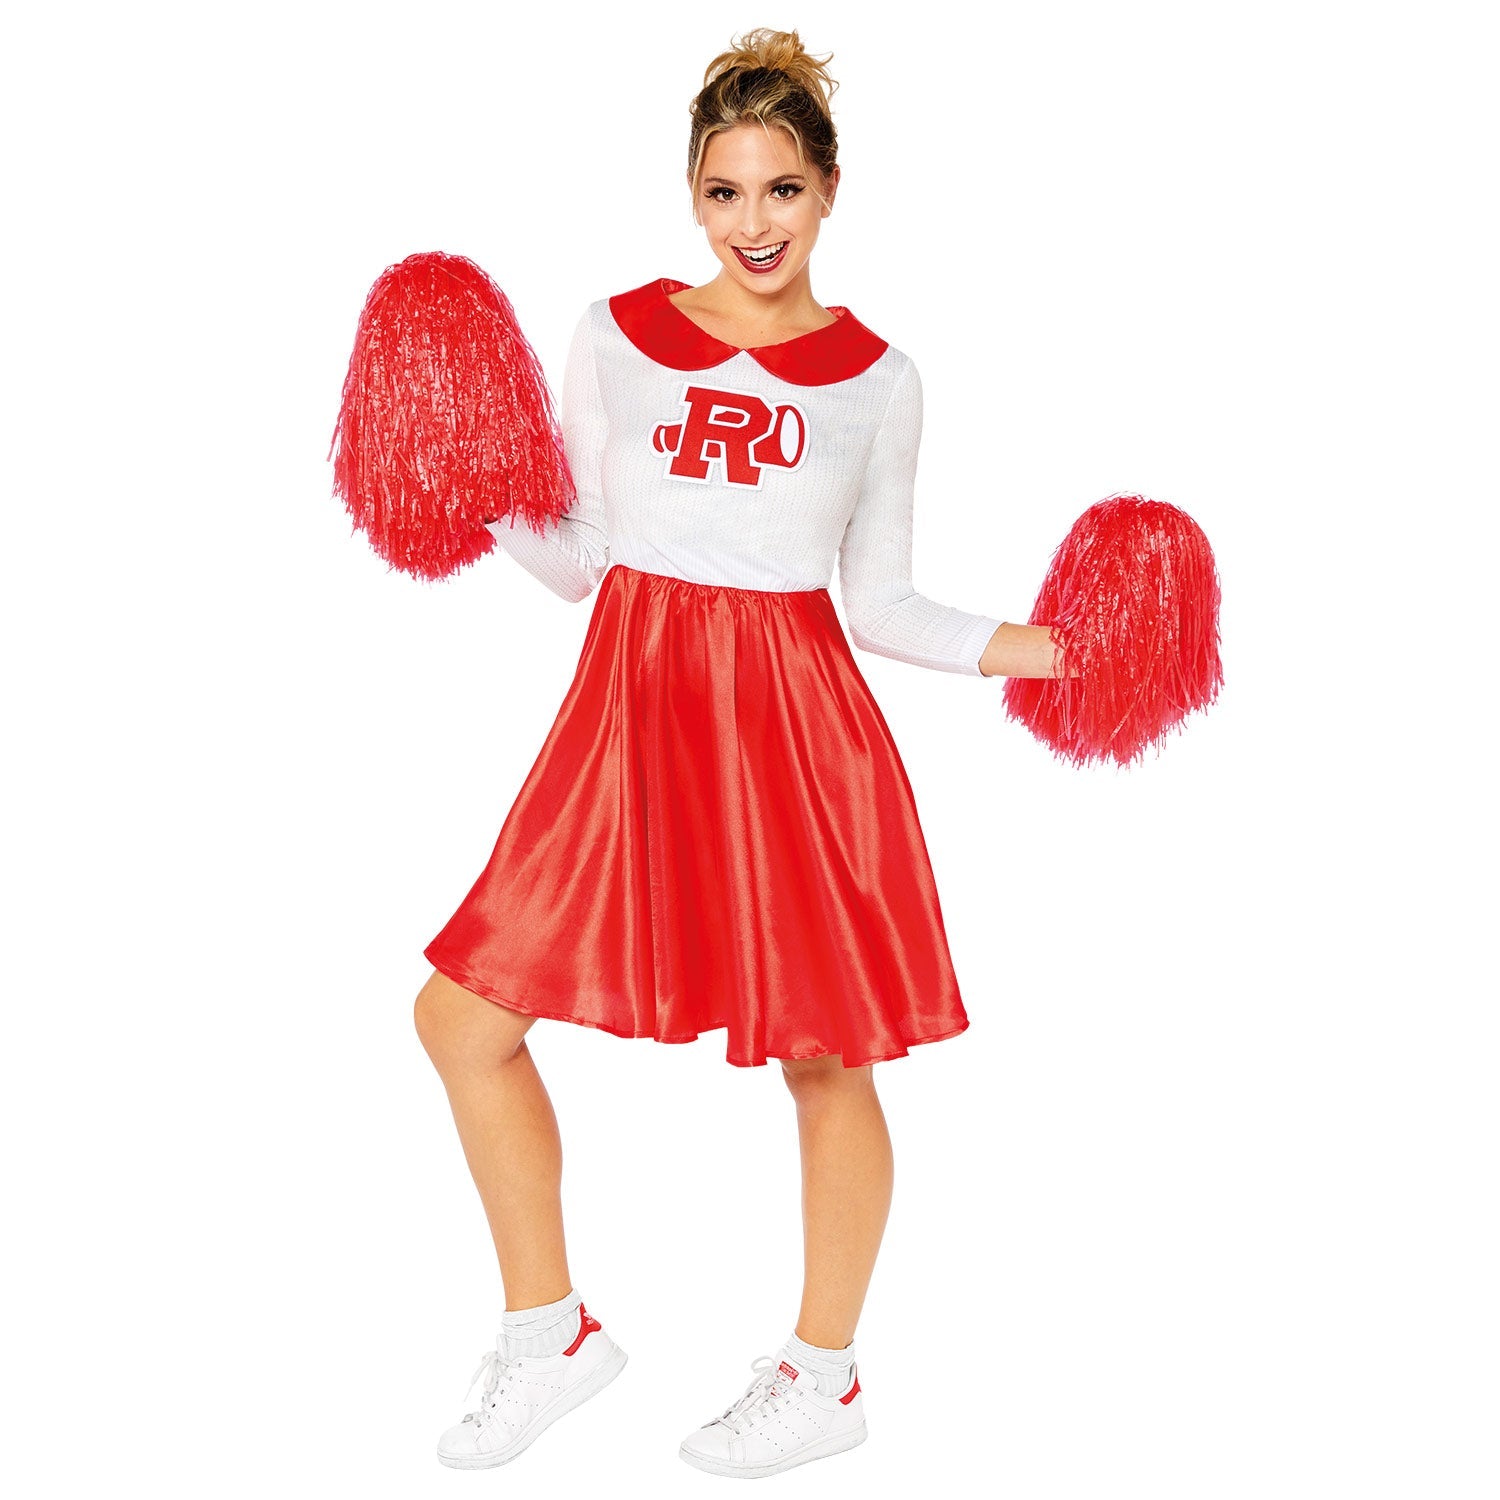 Costume Grease Sandy Rydell Cheerleader - Adult